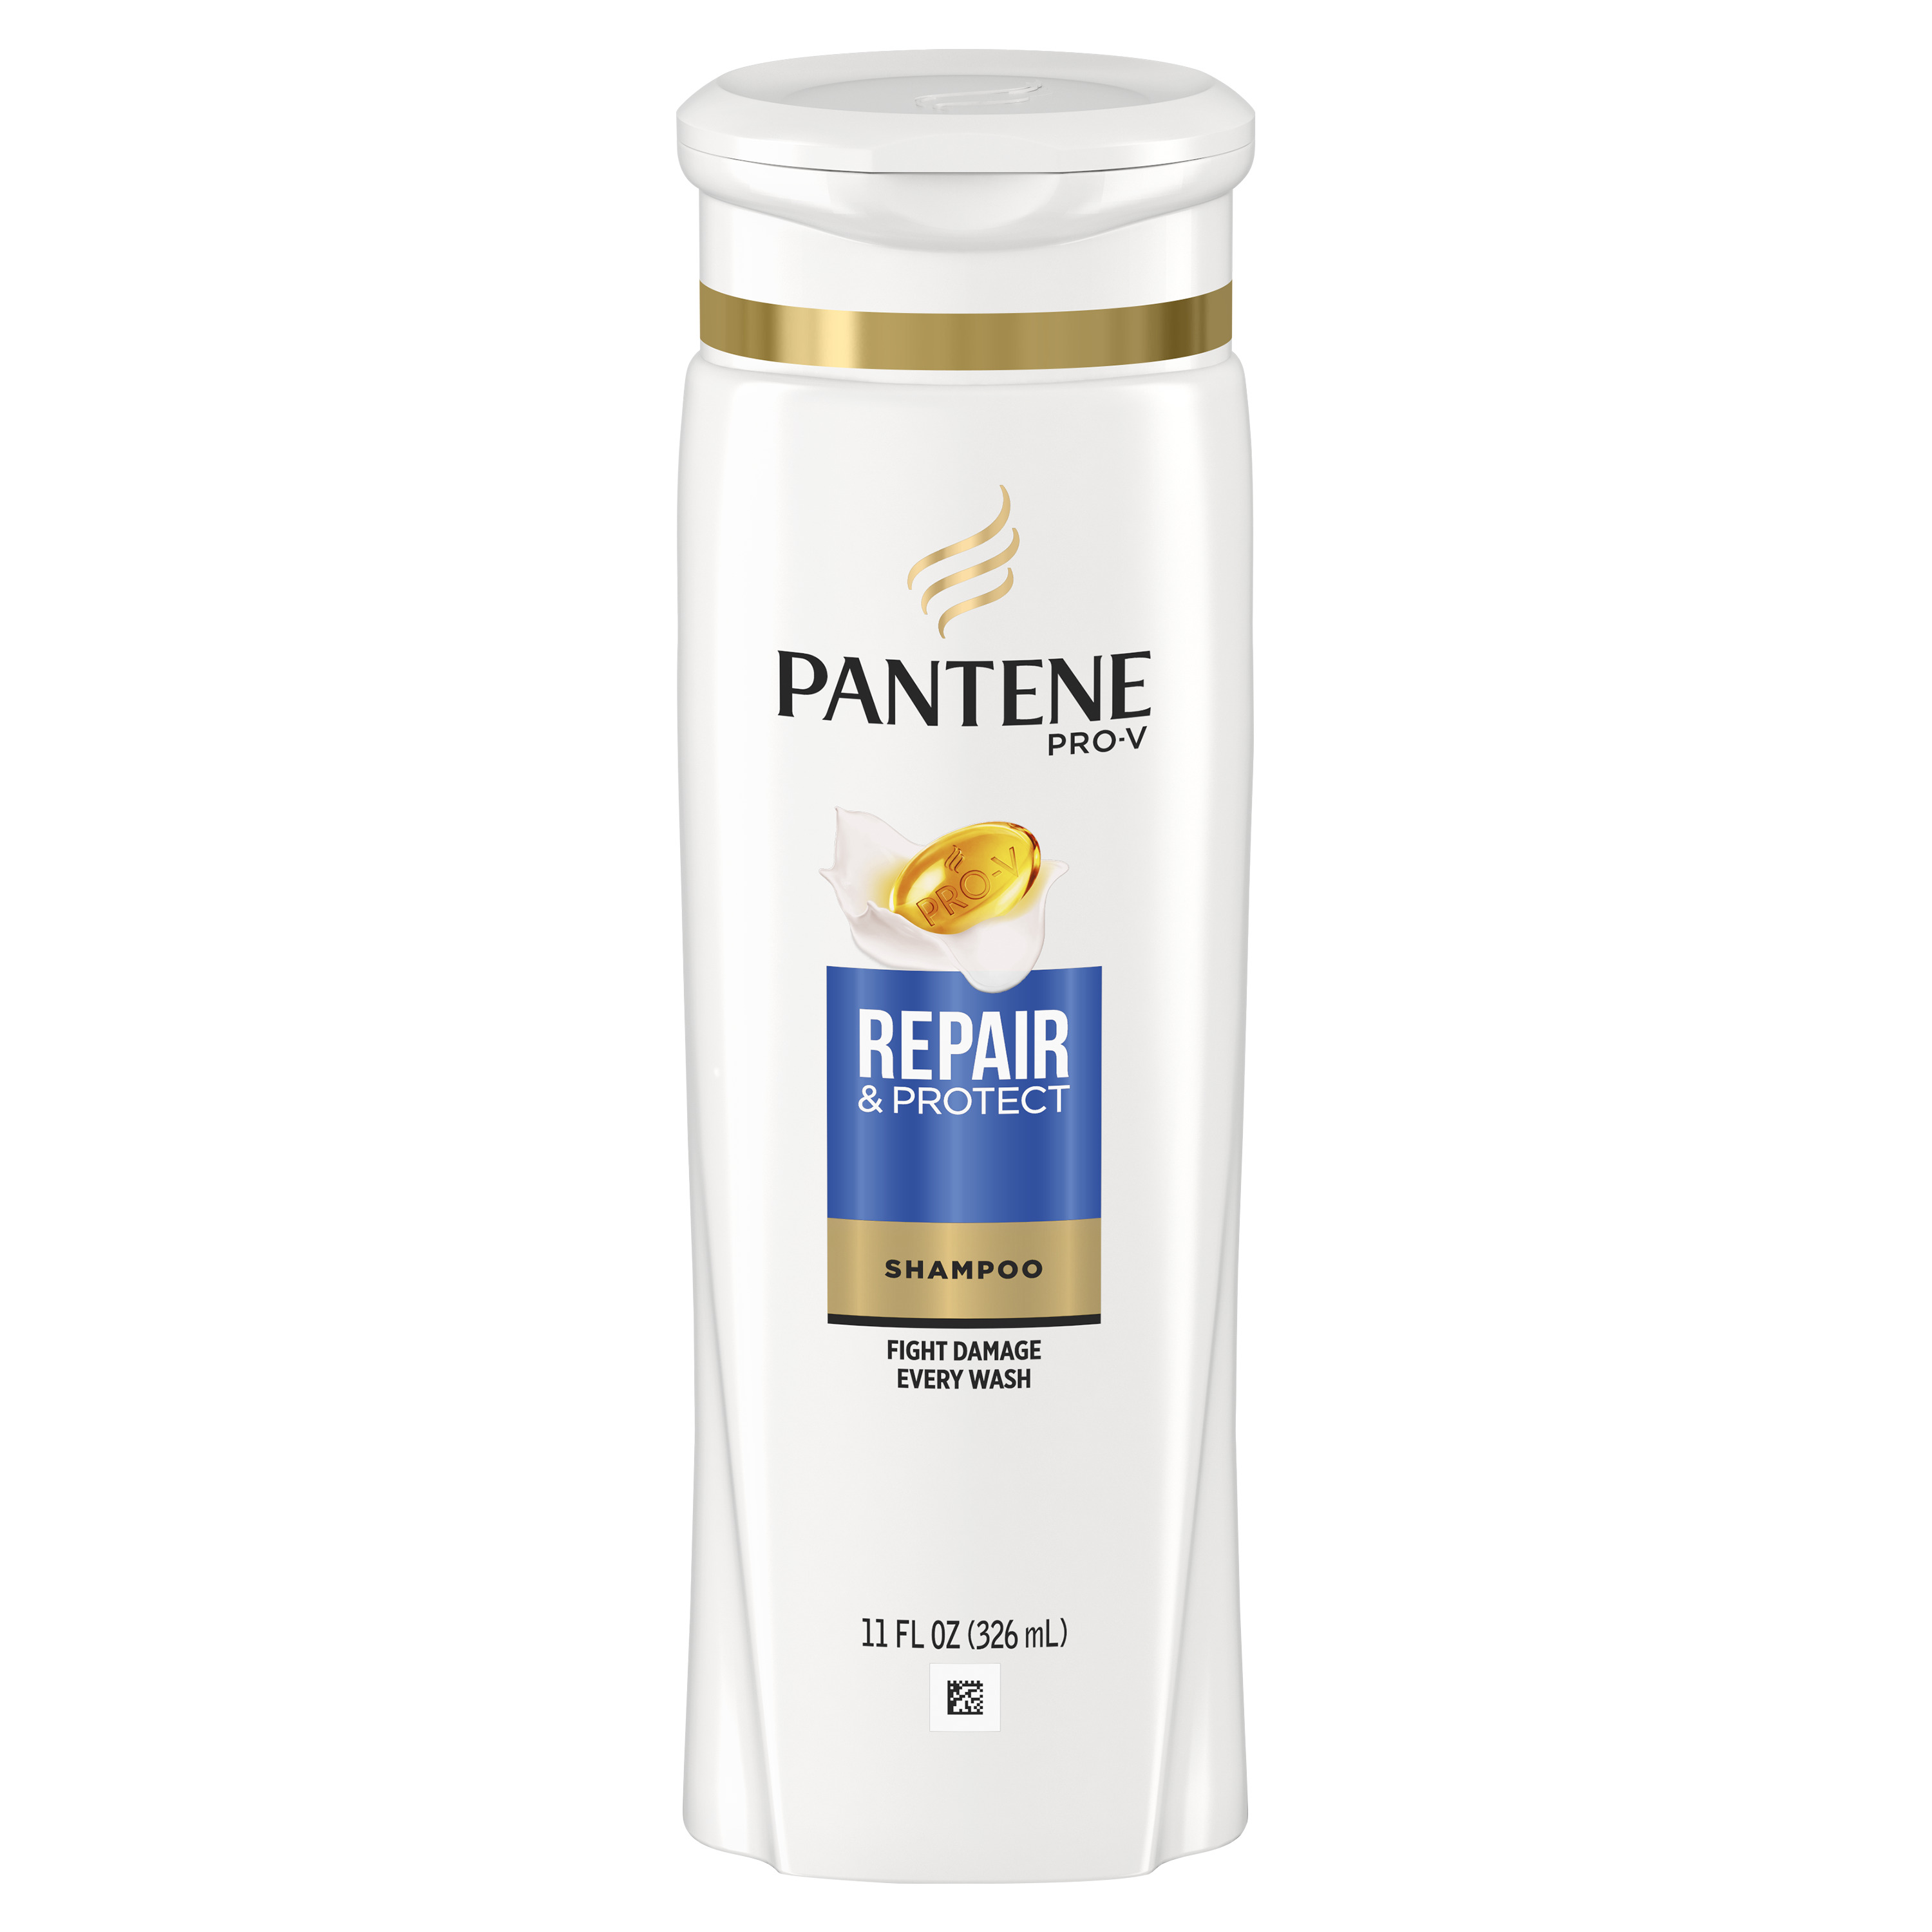 Pantene Pro-V Repair and Protect Repairing Detangling Daily Shampoo, 11 fl oz - image 4 of 7